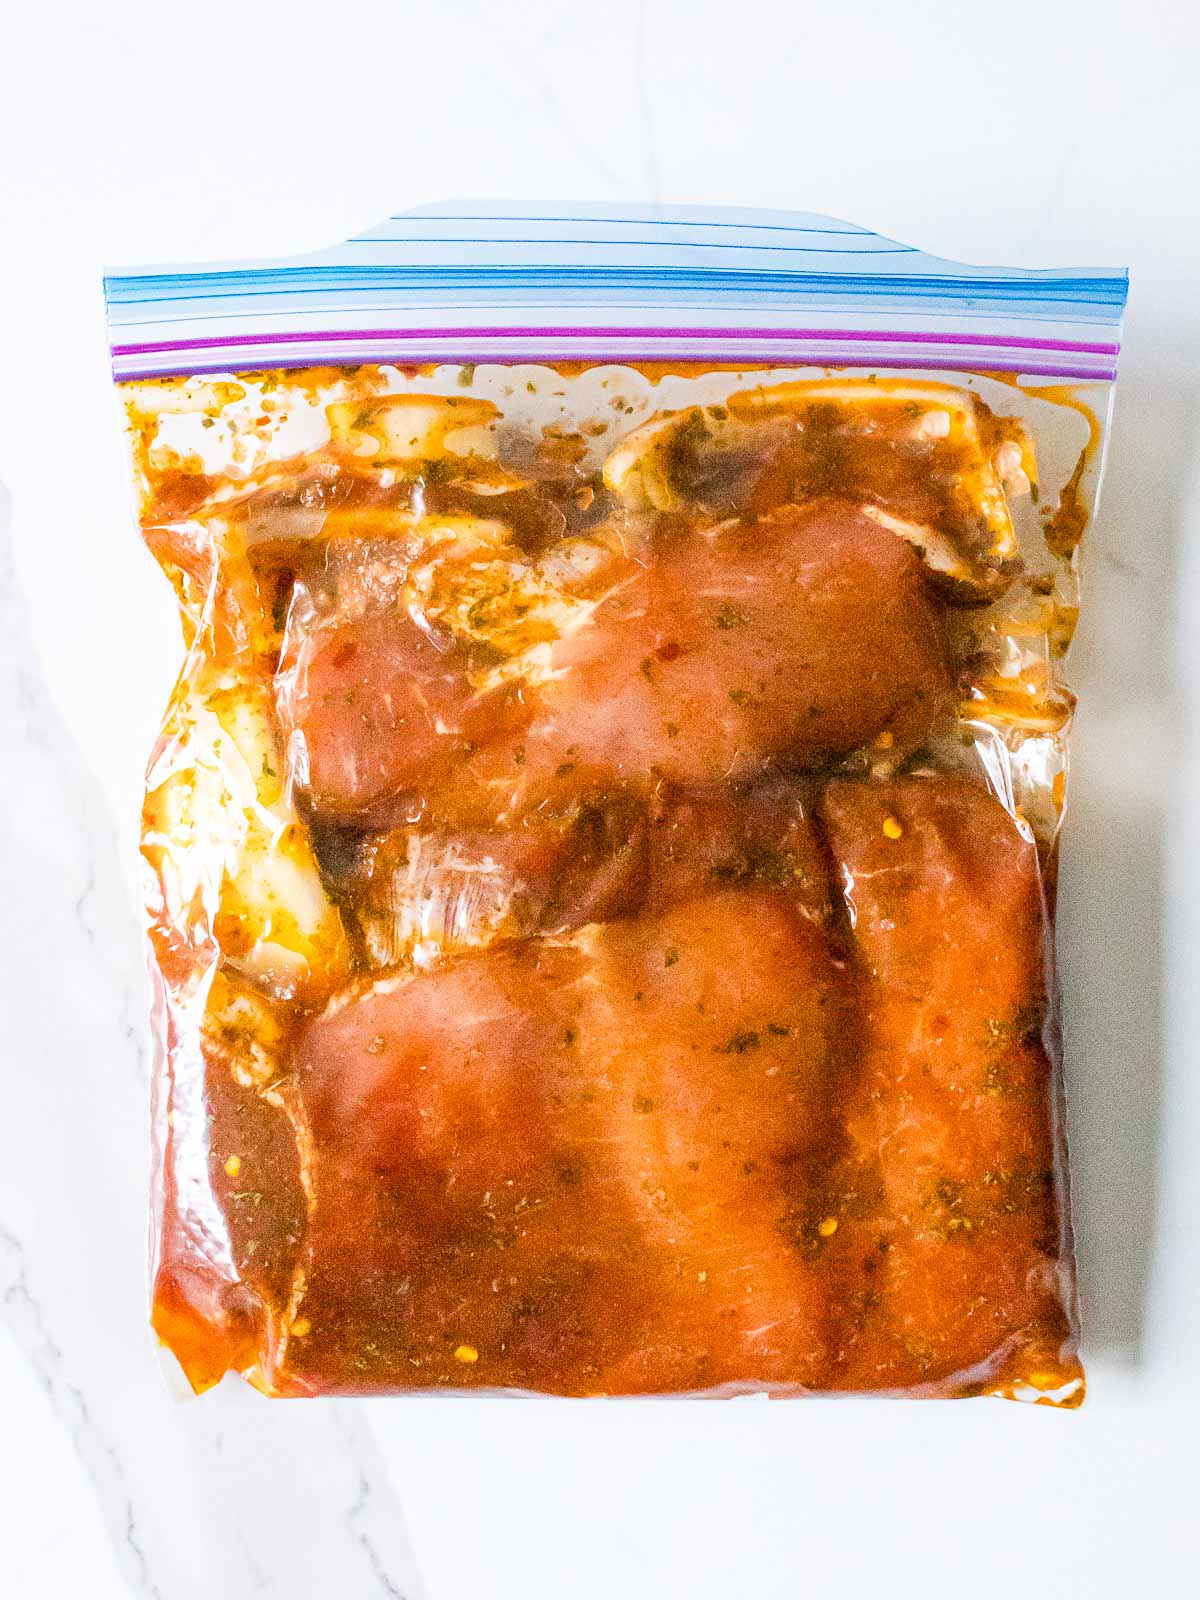 pork chops marinating in a ziplock bag